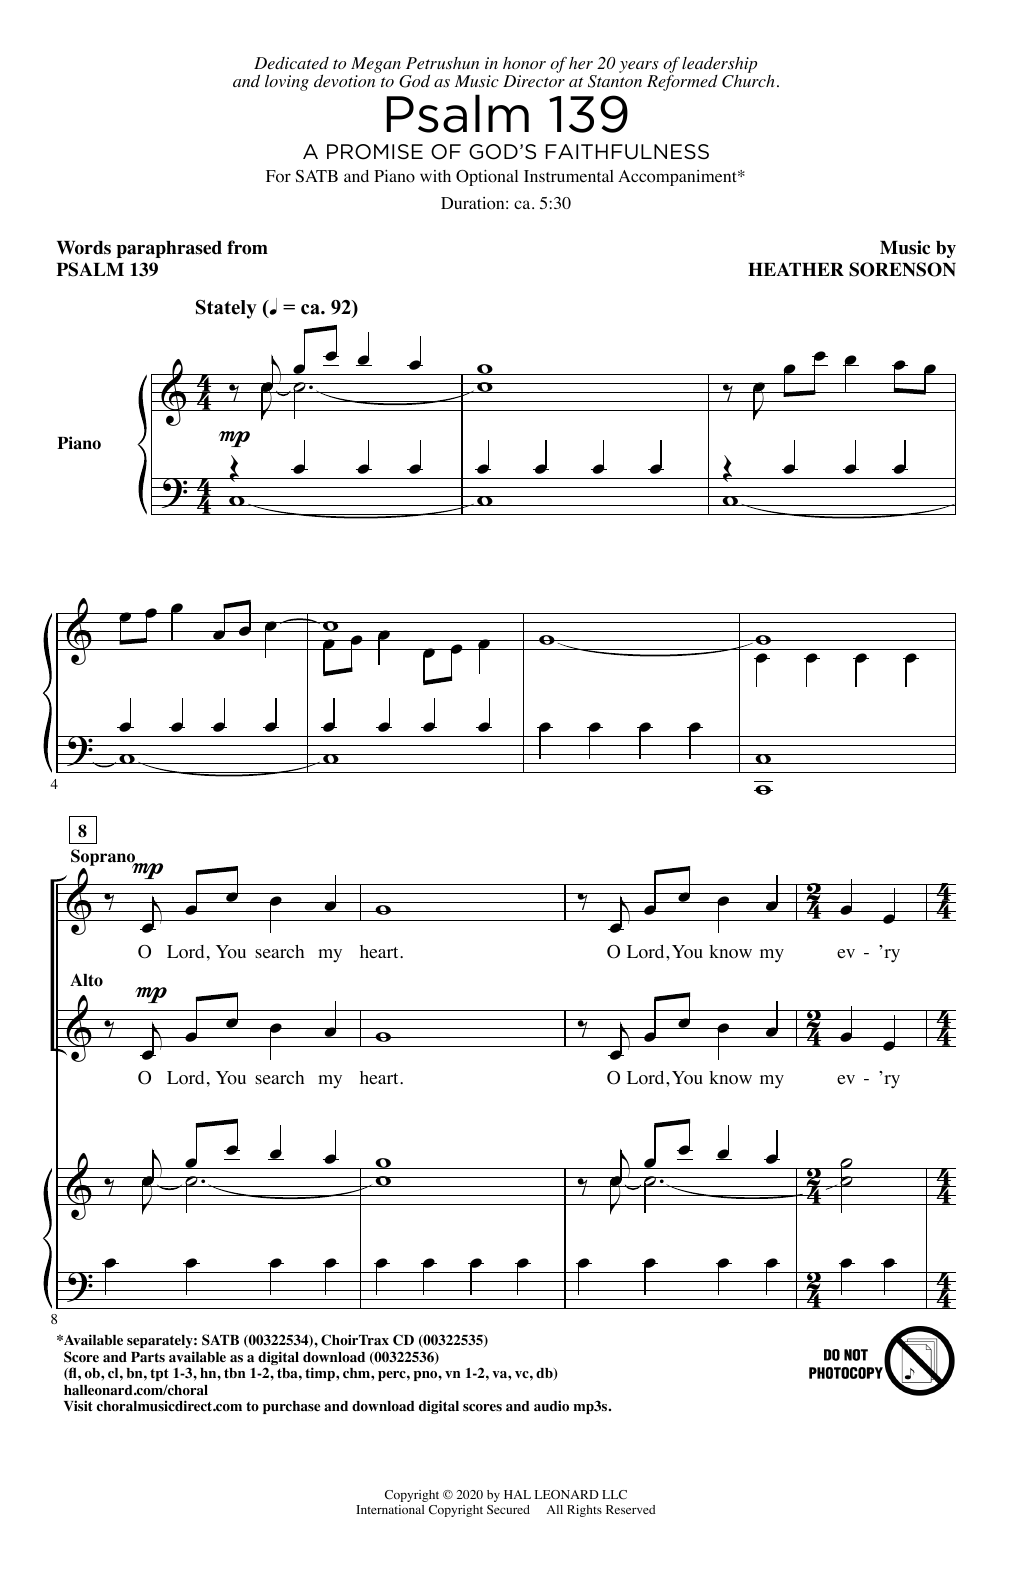 Heather Sorenson Psalm 139 (A Promise of God's Faithfulness) sheet music notes and chords arranged for SATB Choir